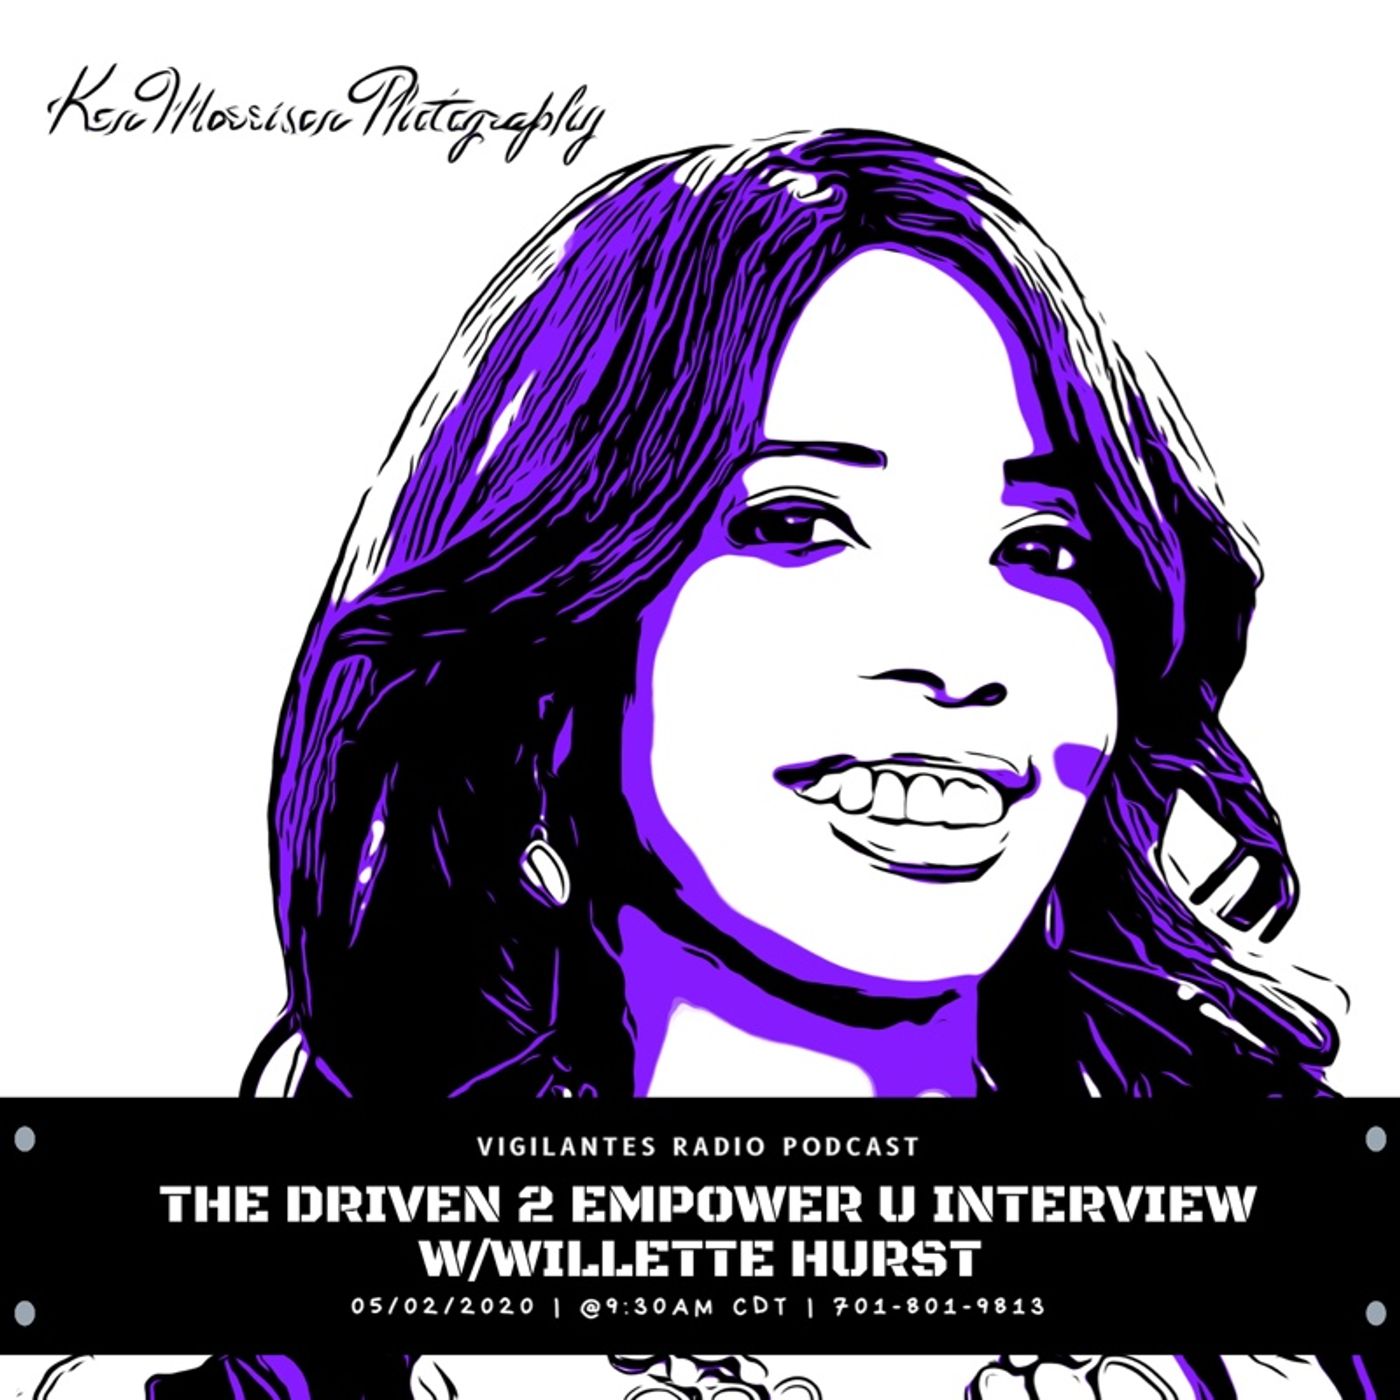 The Driven 2 Empower U Interview w/Willette Hurst. Image